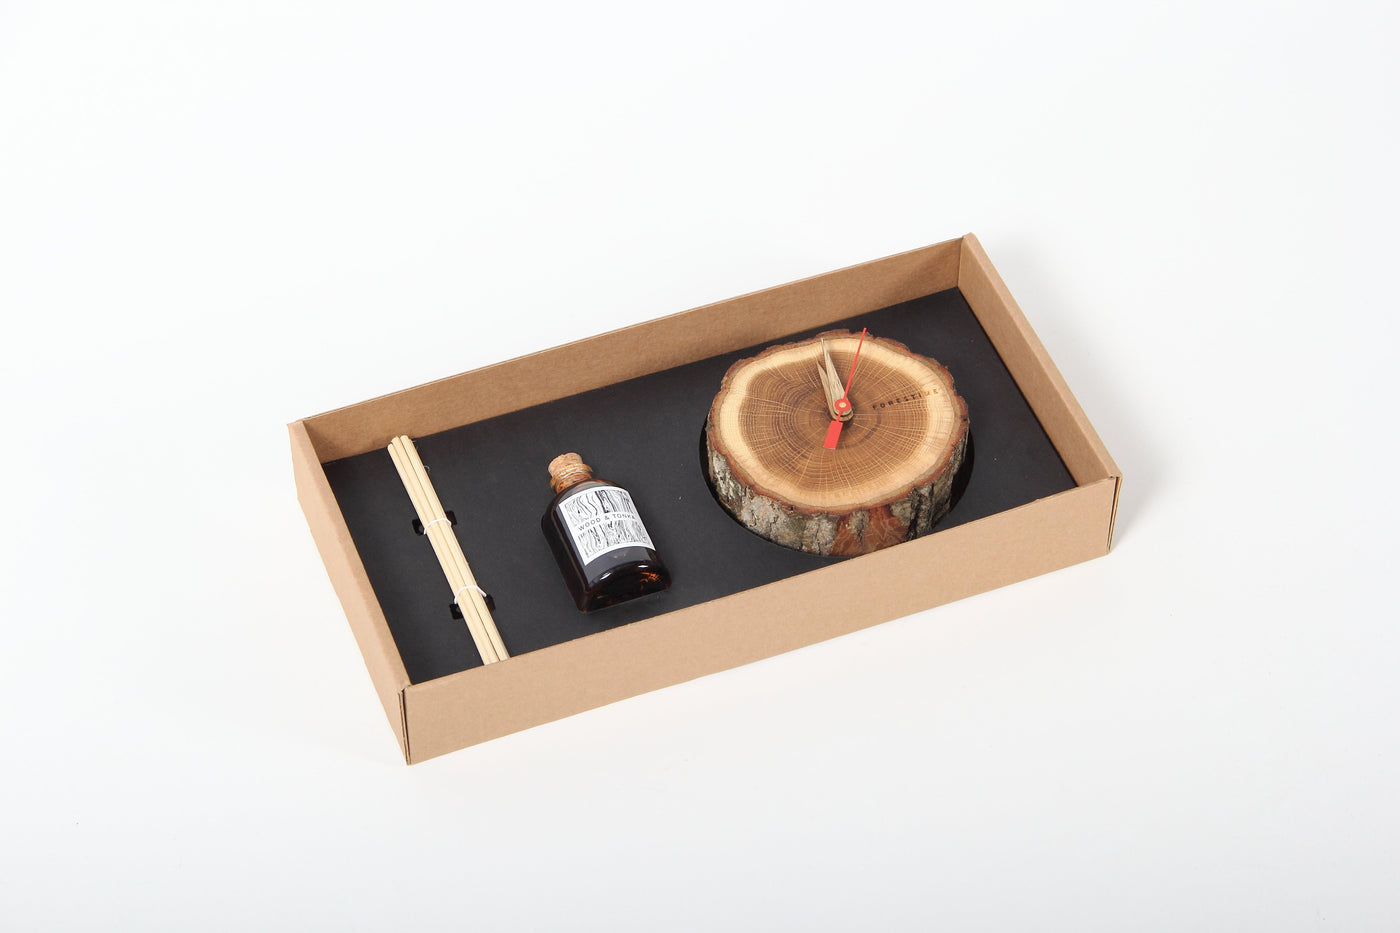 Laika Oak Slice Clock Gift Set-Home Goods-CLOCKS, ESSENTIAL OILS, OIL DIFFUSERS-Forest Homes-Nature inspired decor-Nature decor